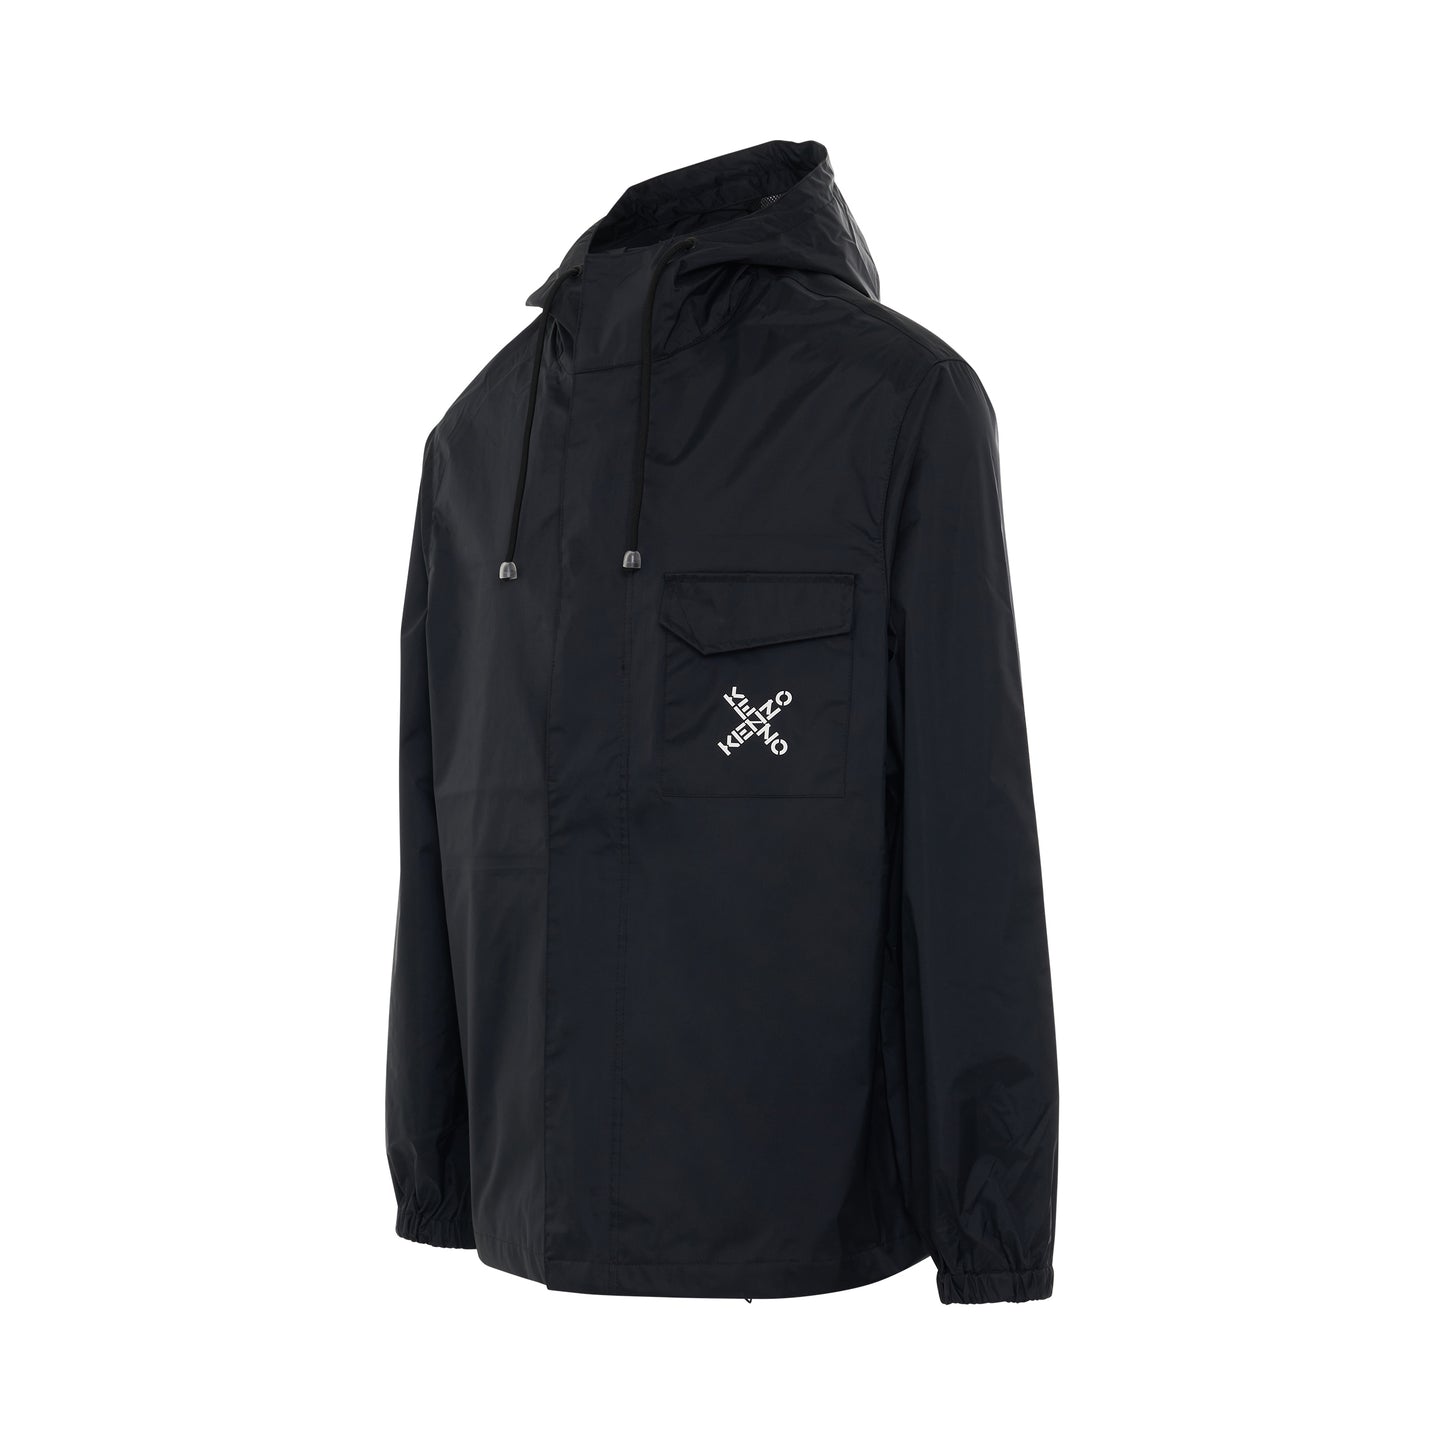 Kenzo Sport X Logo Jacket in Black